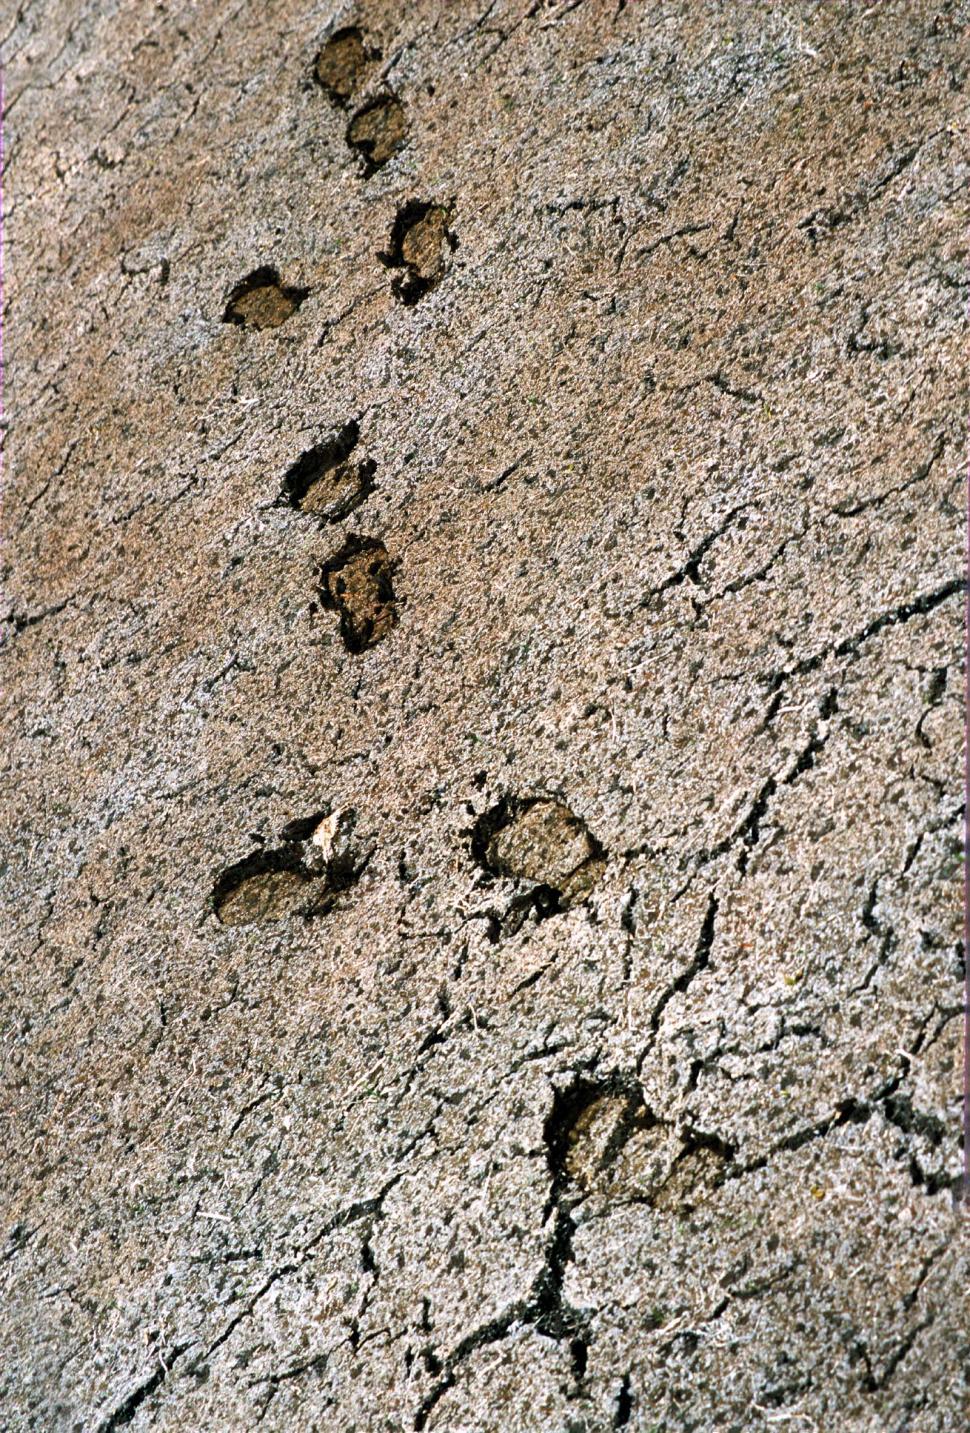 Free Image of Footprints in the mud 